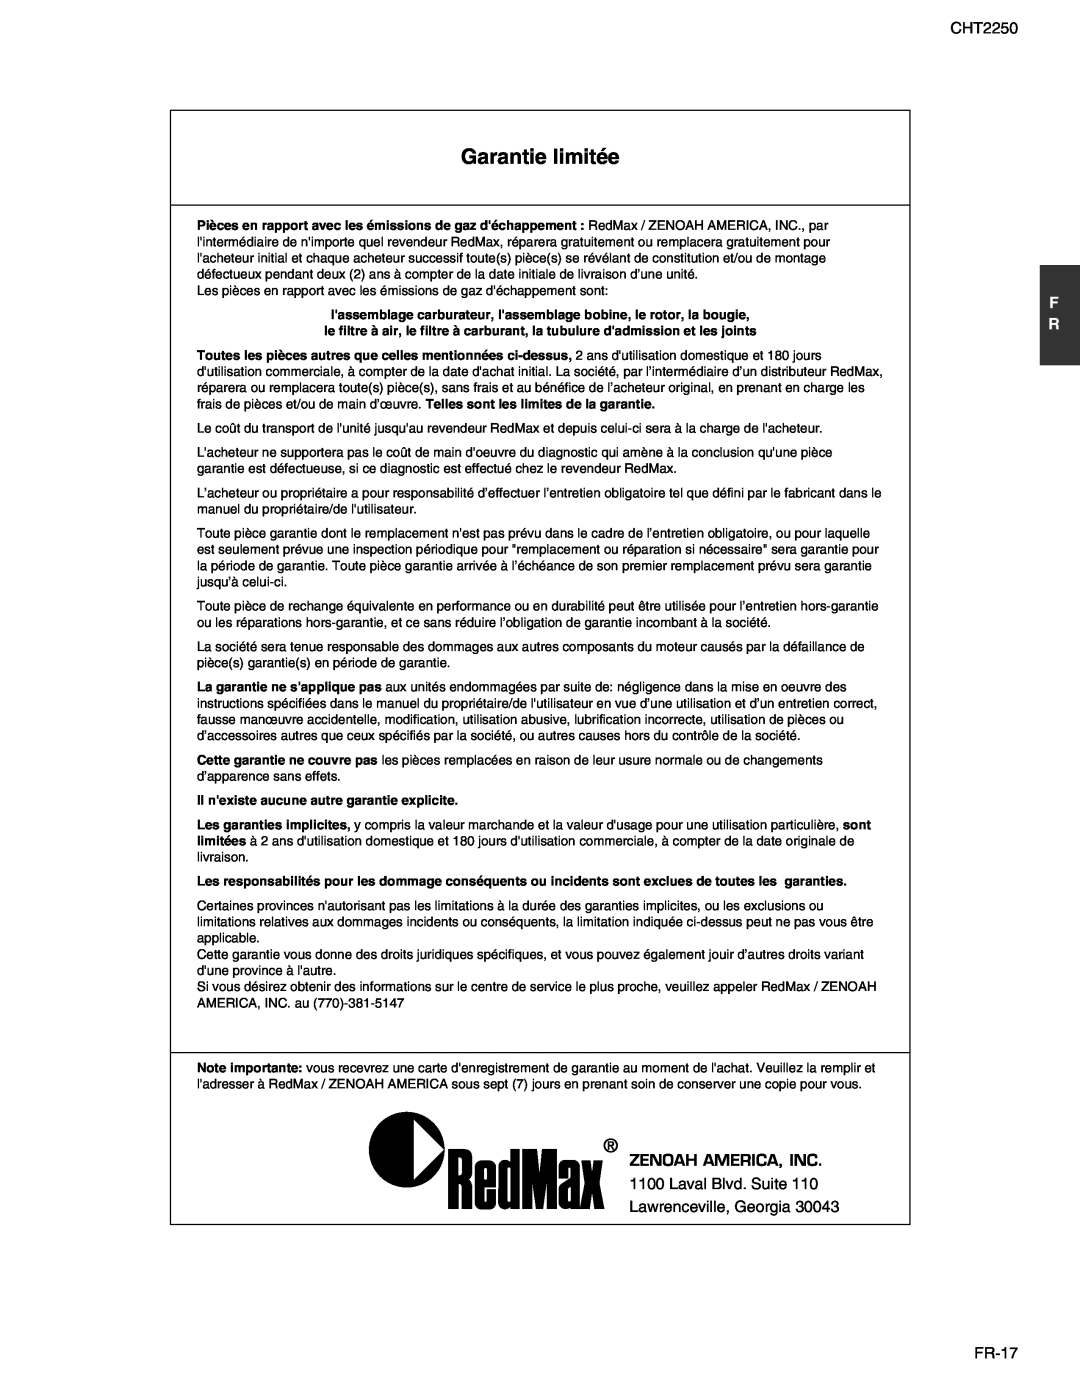 RedMax CHT2250 manual Garantie limitée, Zenoah America, Inc 